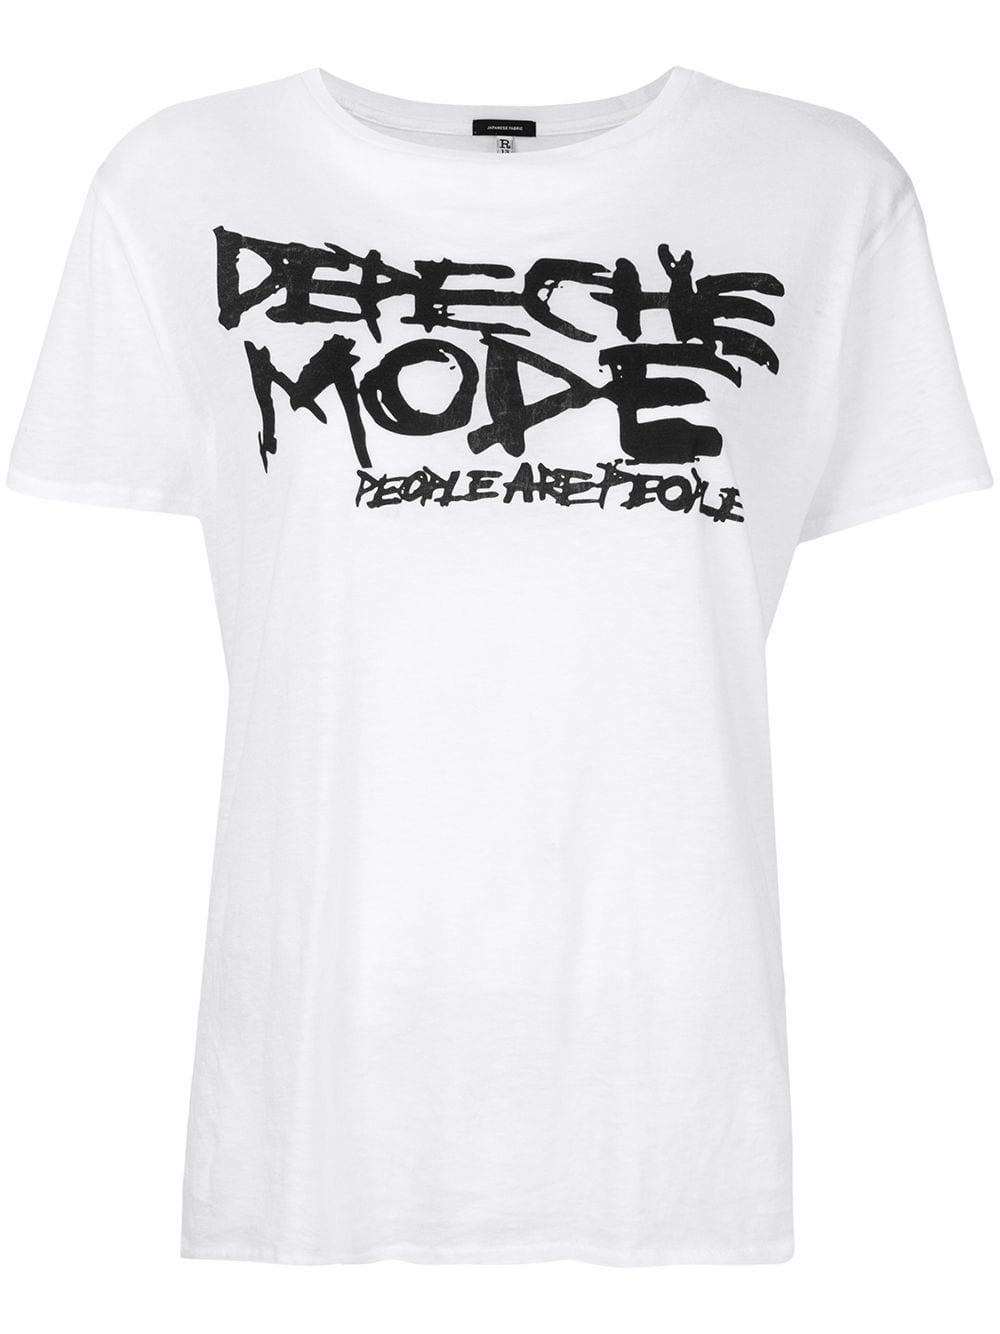 Motivieren Flügel jeden Tag depeche mode t shirt kaufen ...